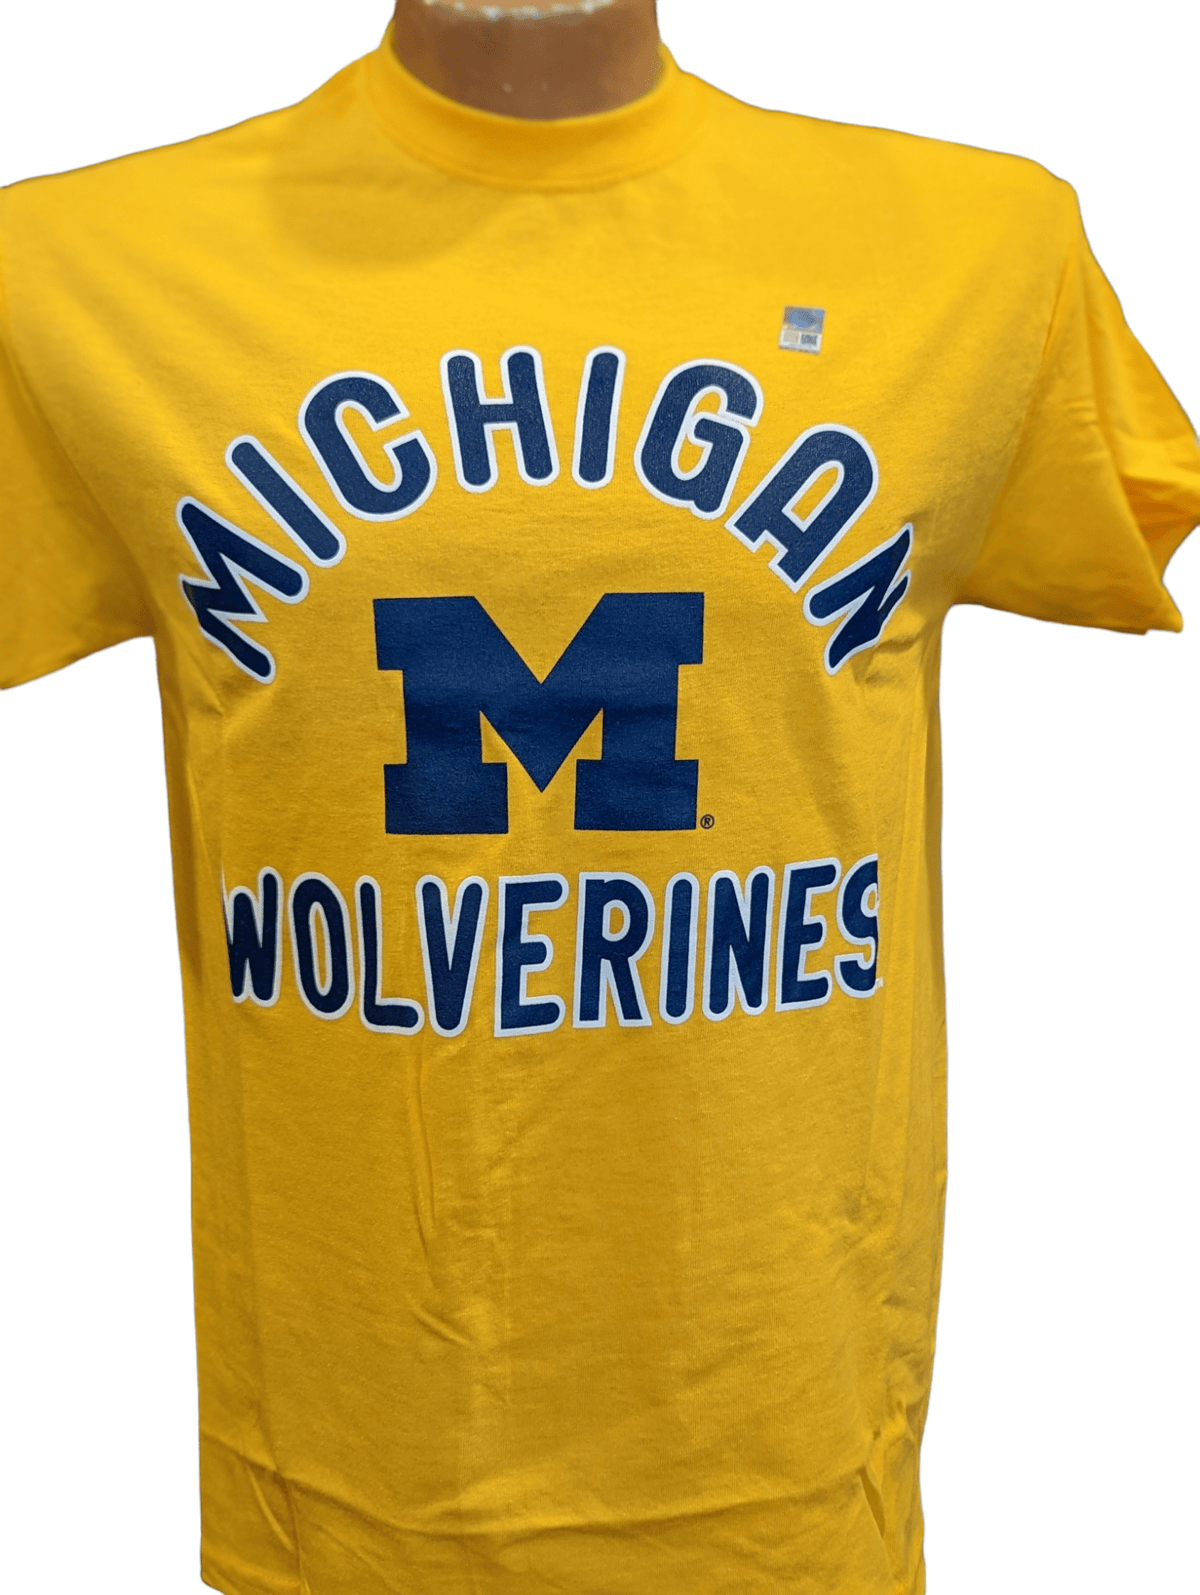 Blue 84 Shirts & Tops Michigan Wolverines T-Shirt Maize and Blue Michigan Wolverines T-Shirt | Carrot Stick Sports